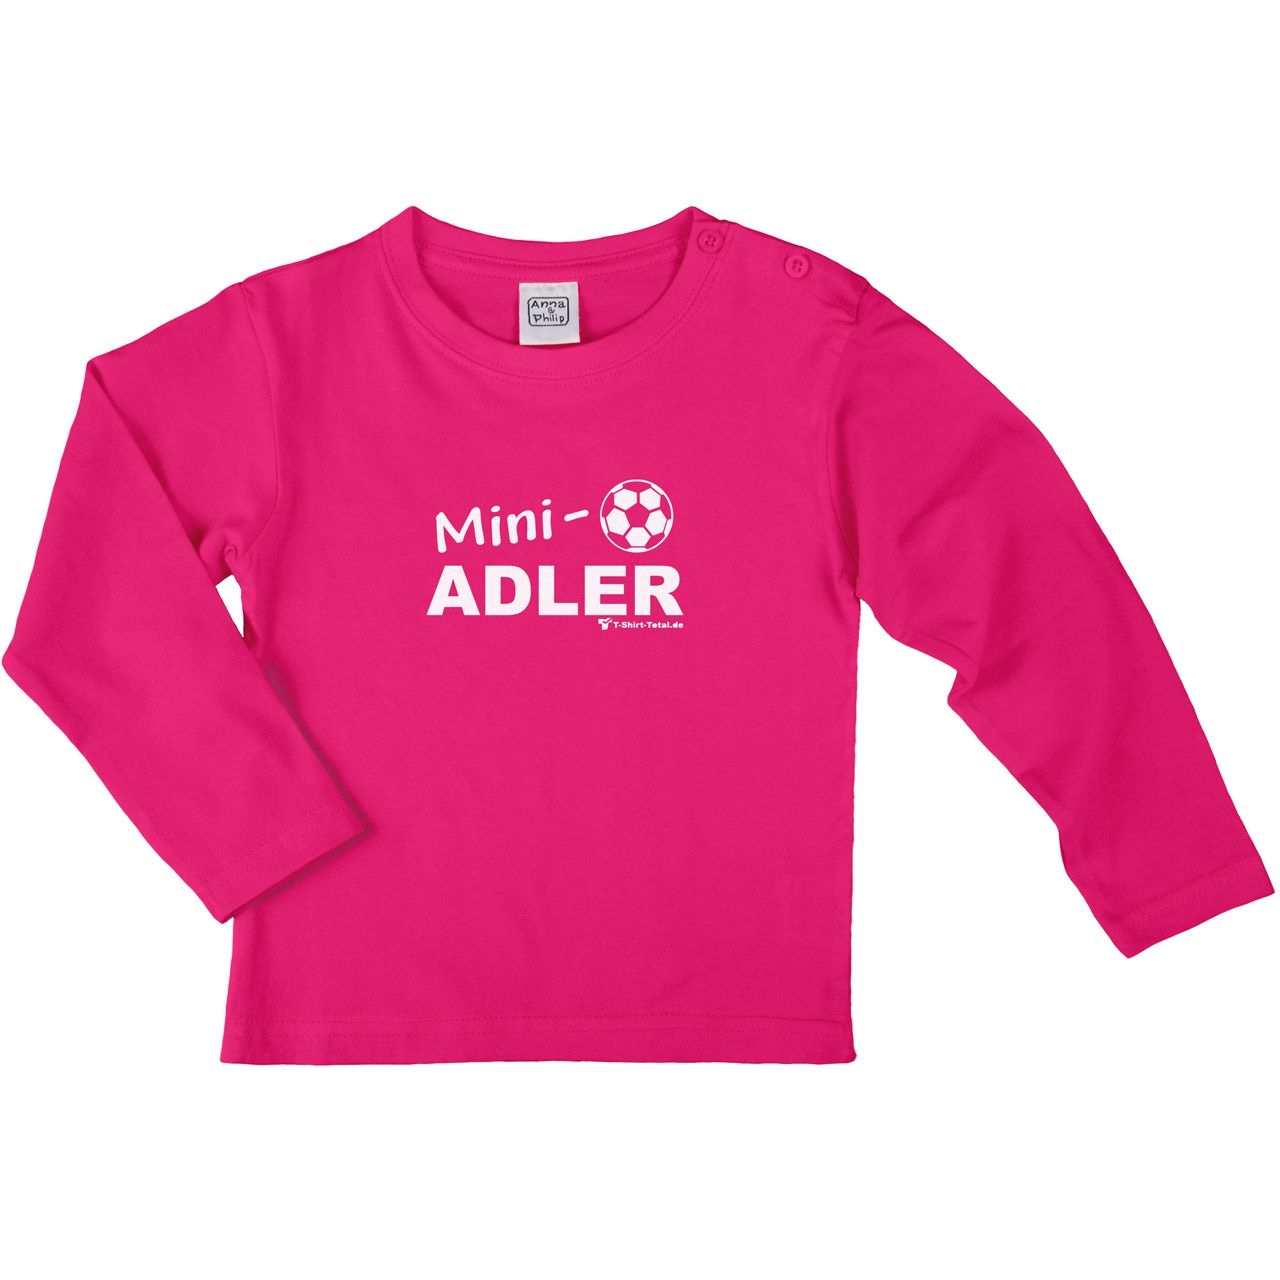 Mini Adler Kinder Langarm Shirt pink 122 / 128